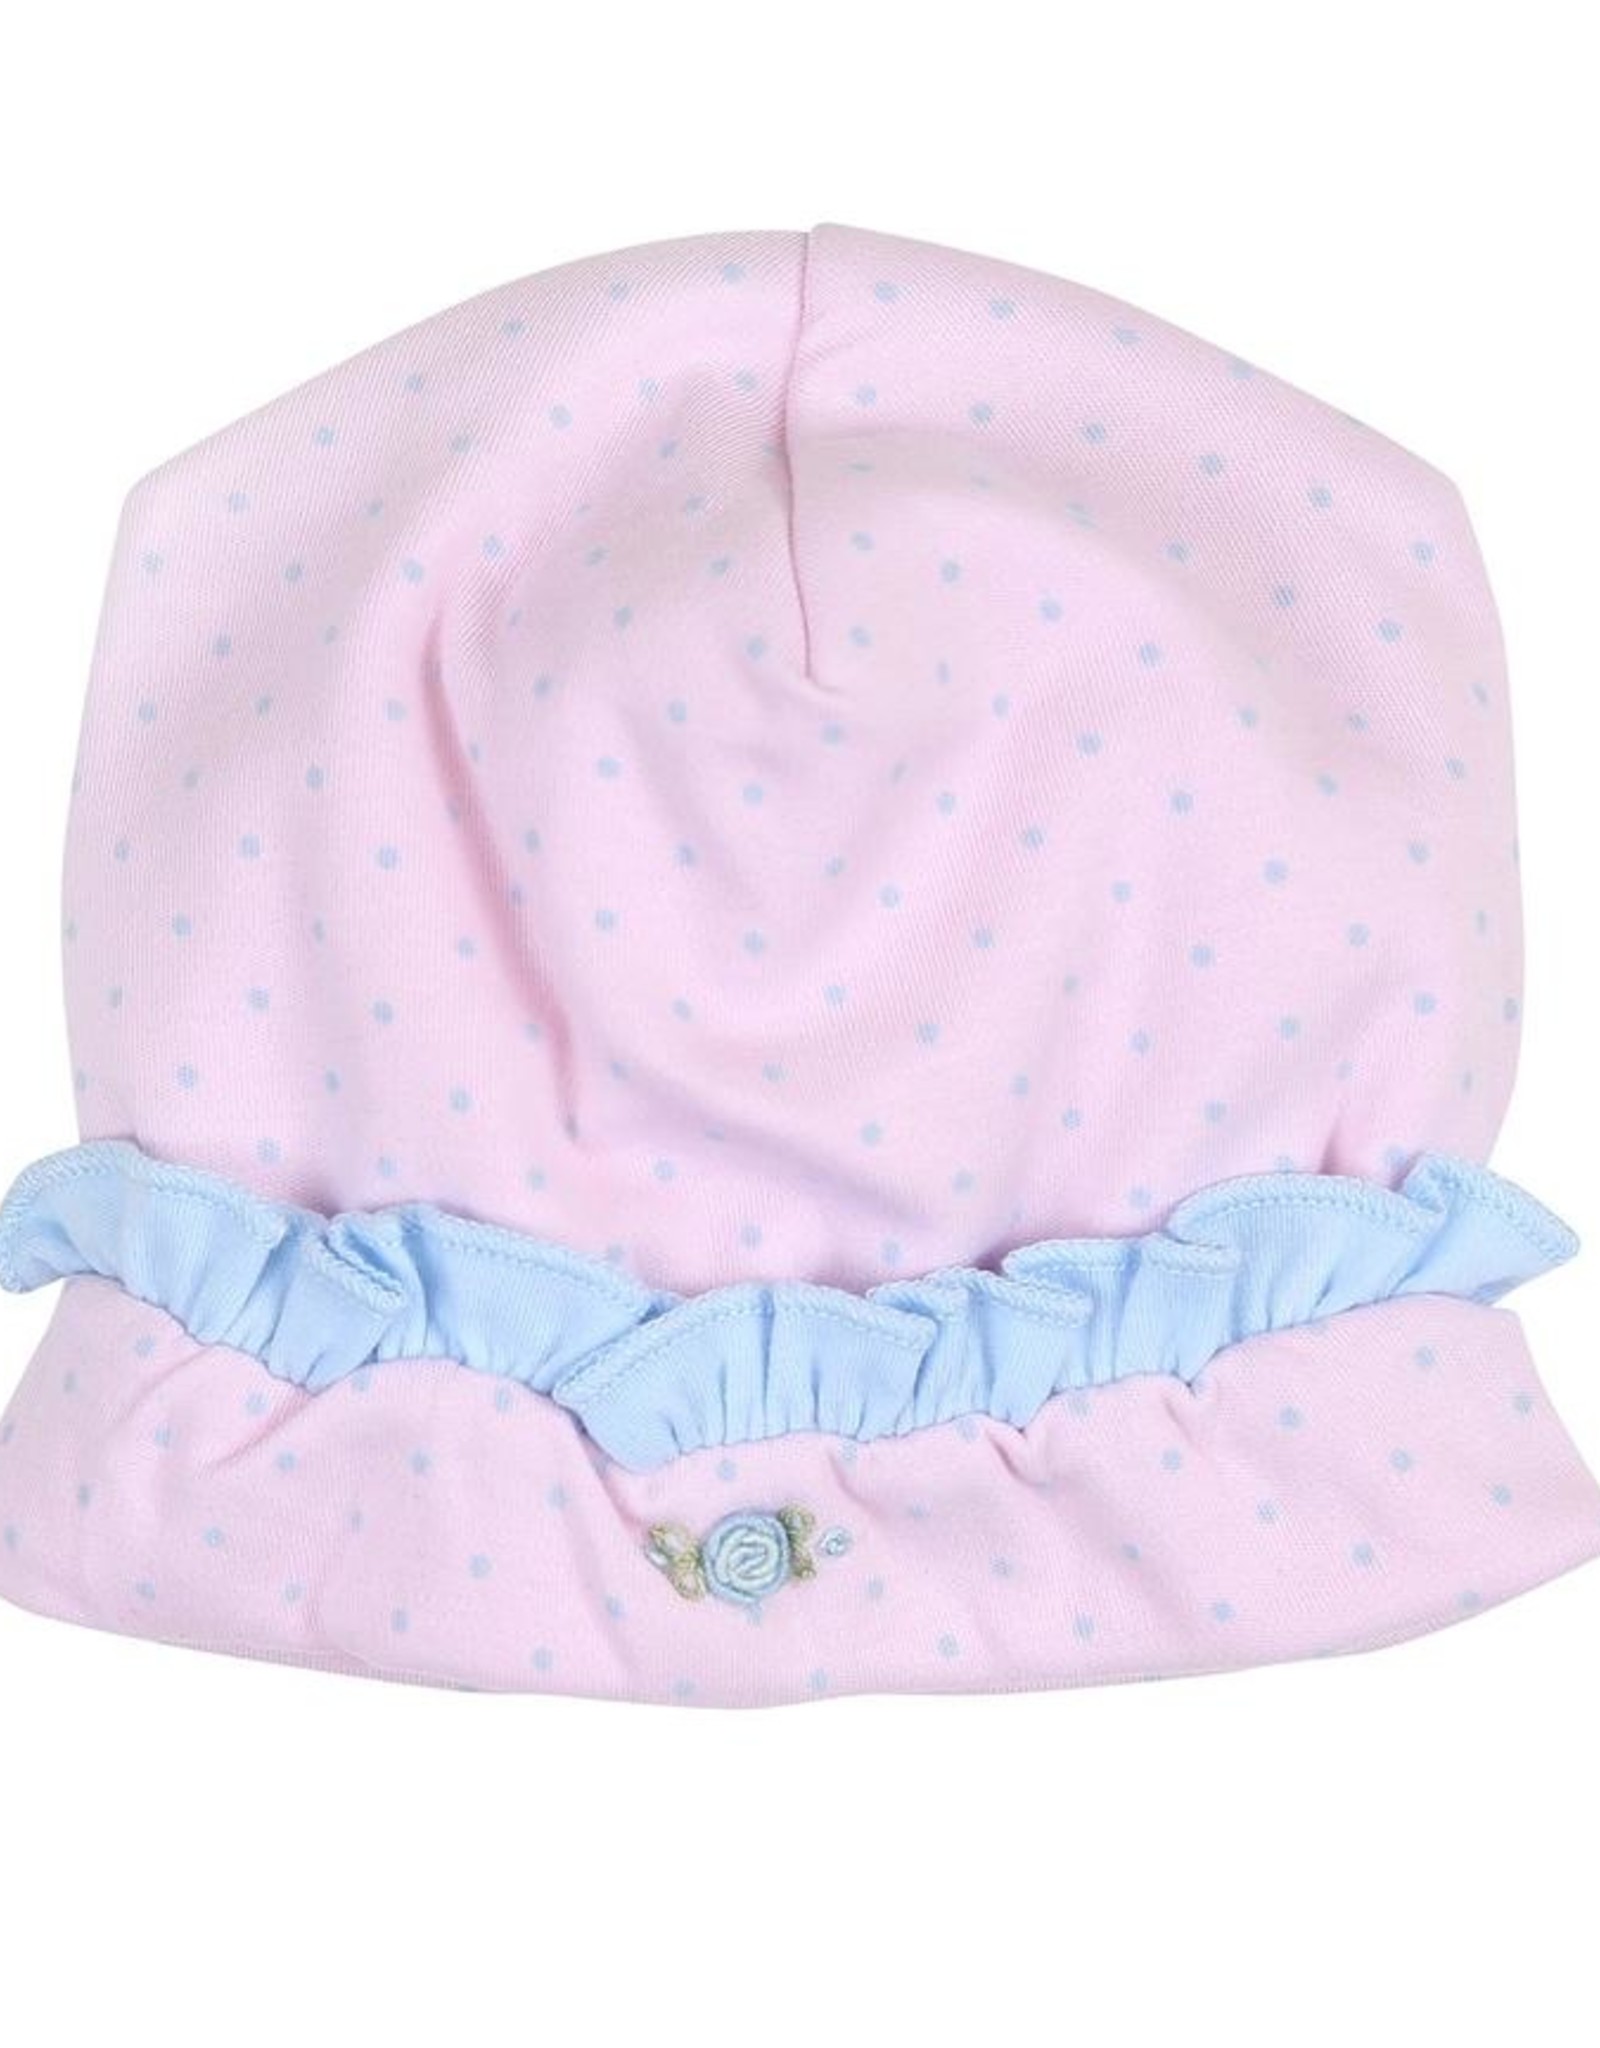 Magnolia Baby Celeste's Classics Emb Ruffle Hat, Pink